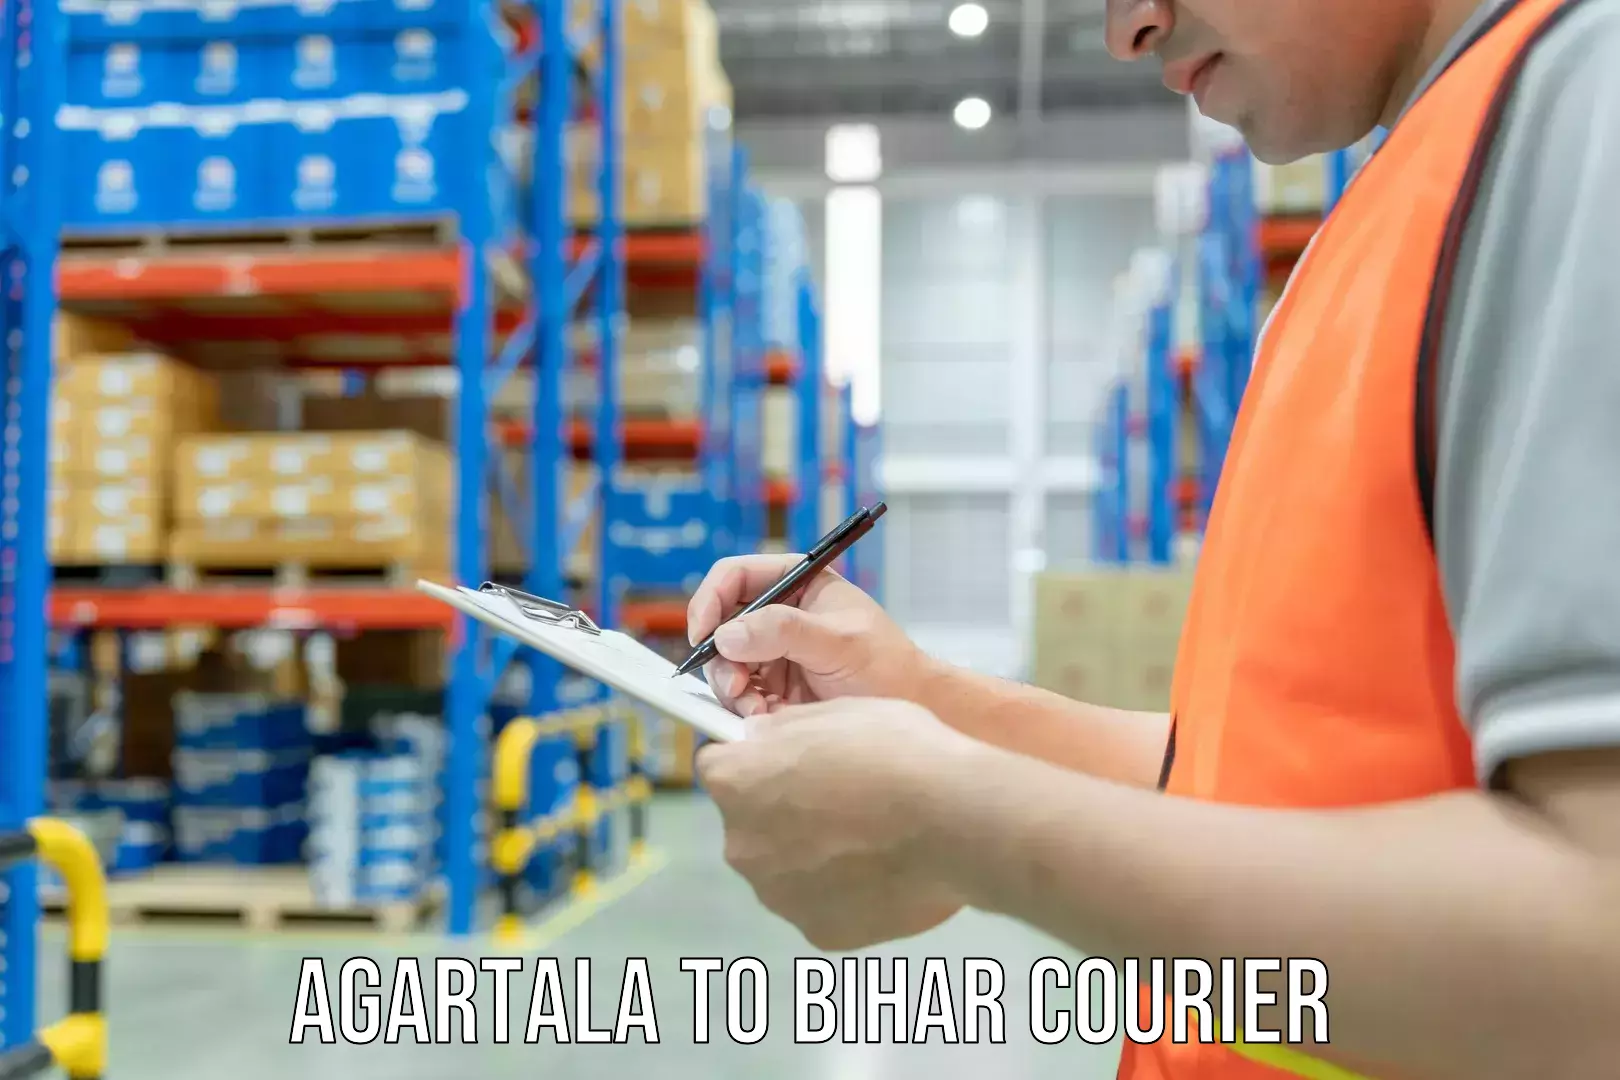 Courier service innovation Agartala to Bihar